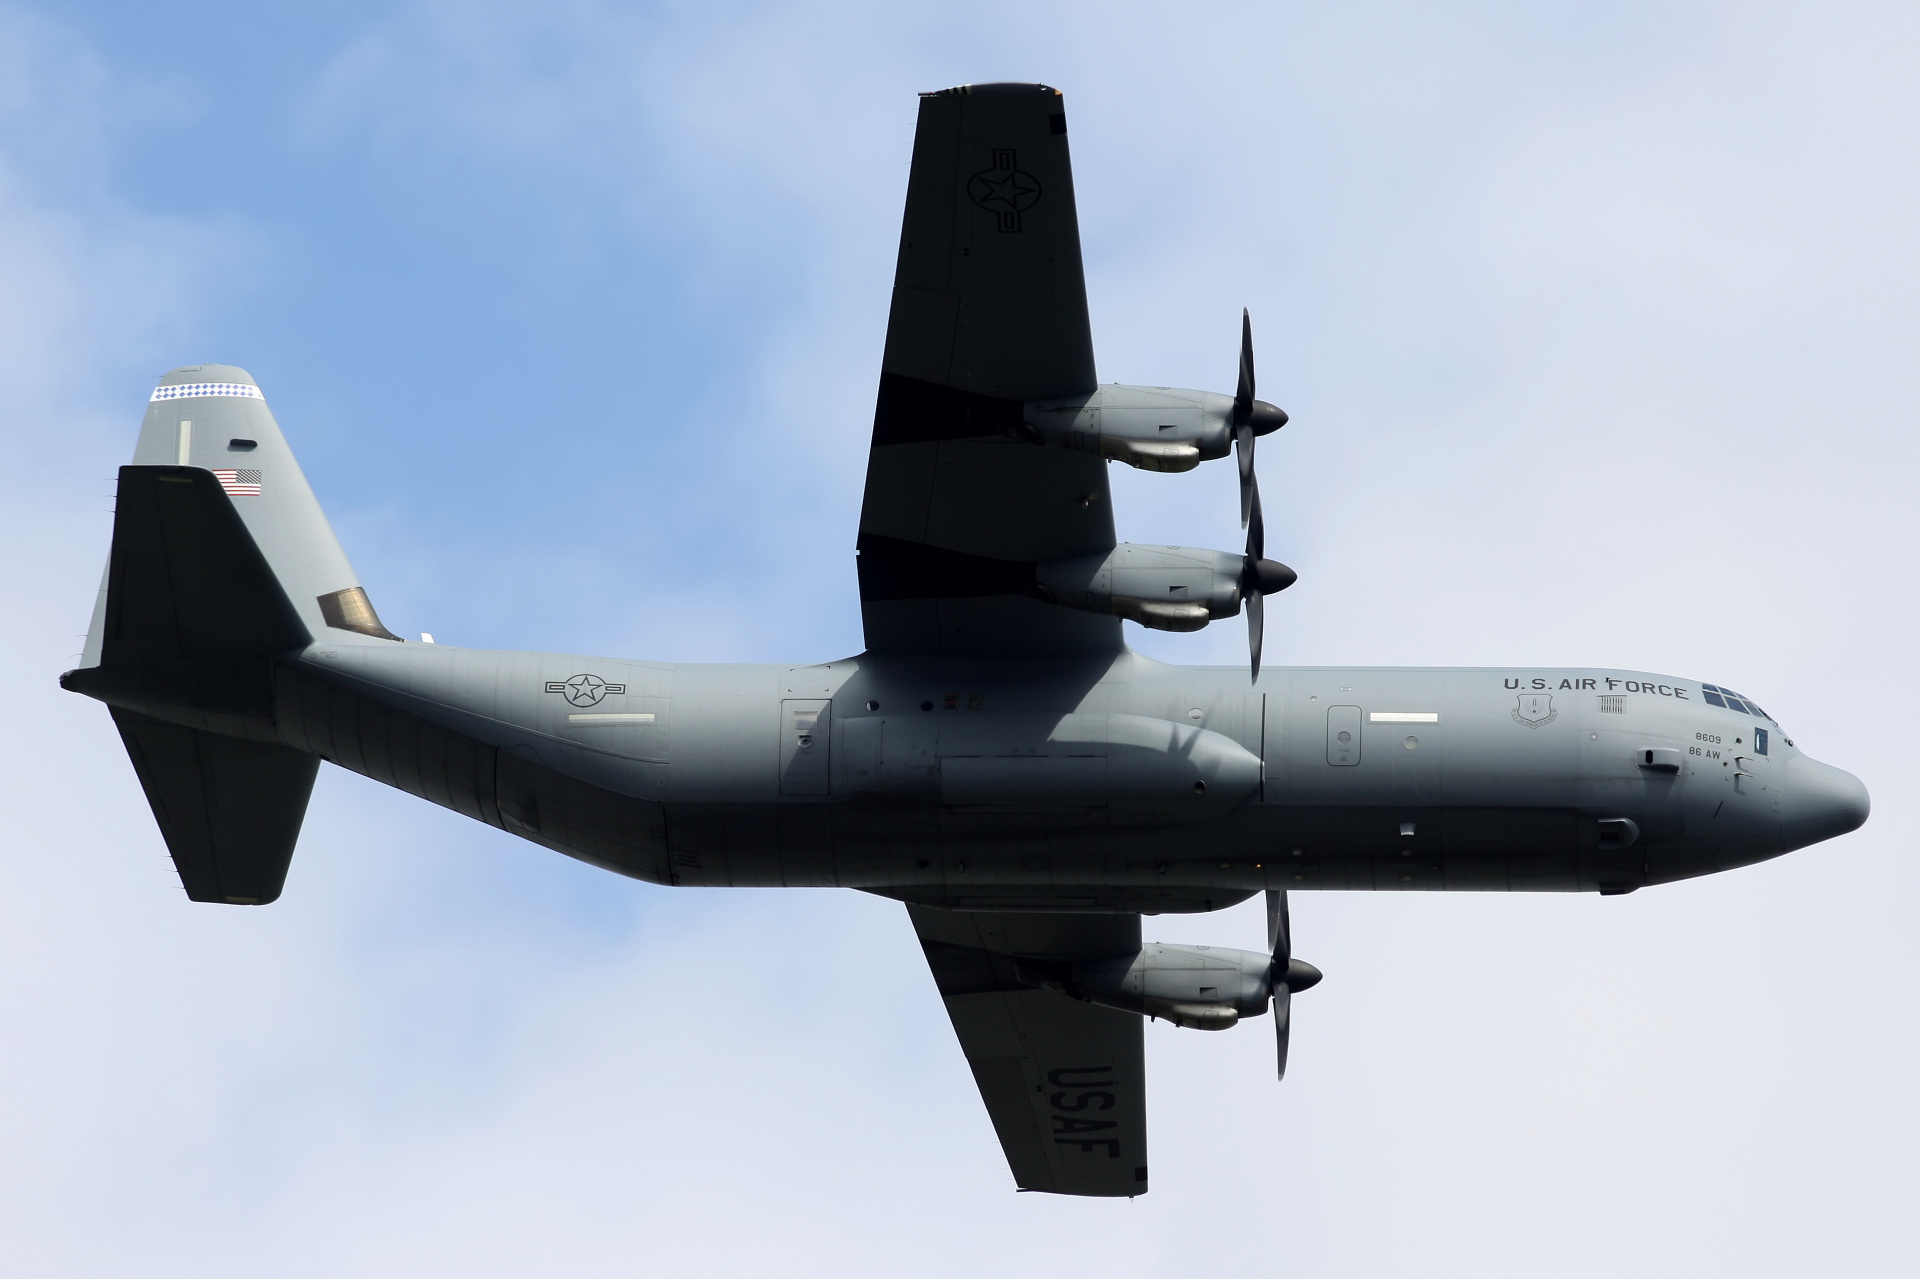 Lockheed C-130J, 07-8609, U.S. Air Force (Aircraft » Polish Army Day Parade fly-by)